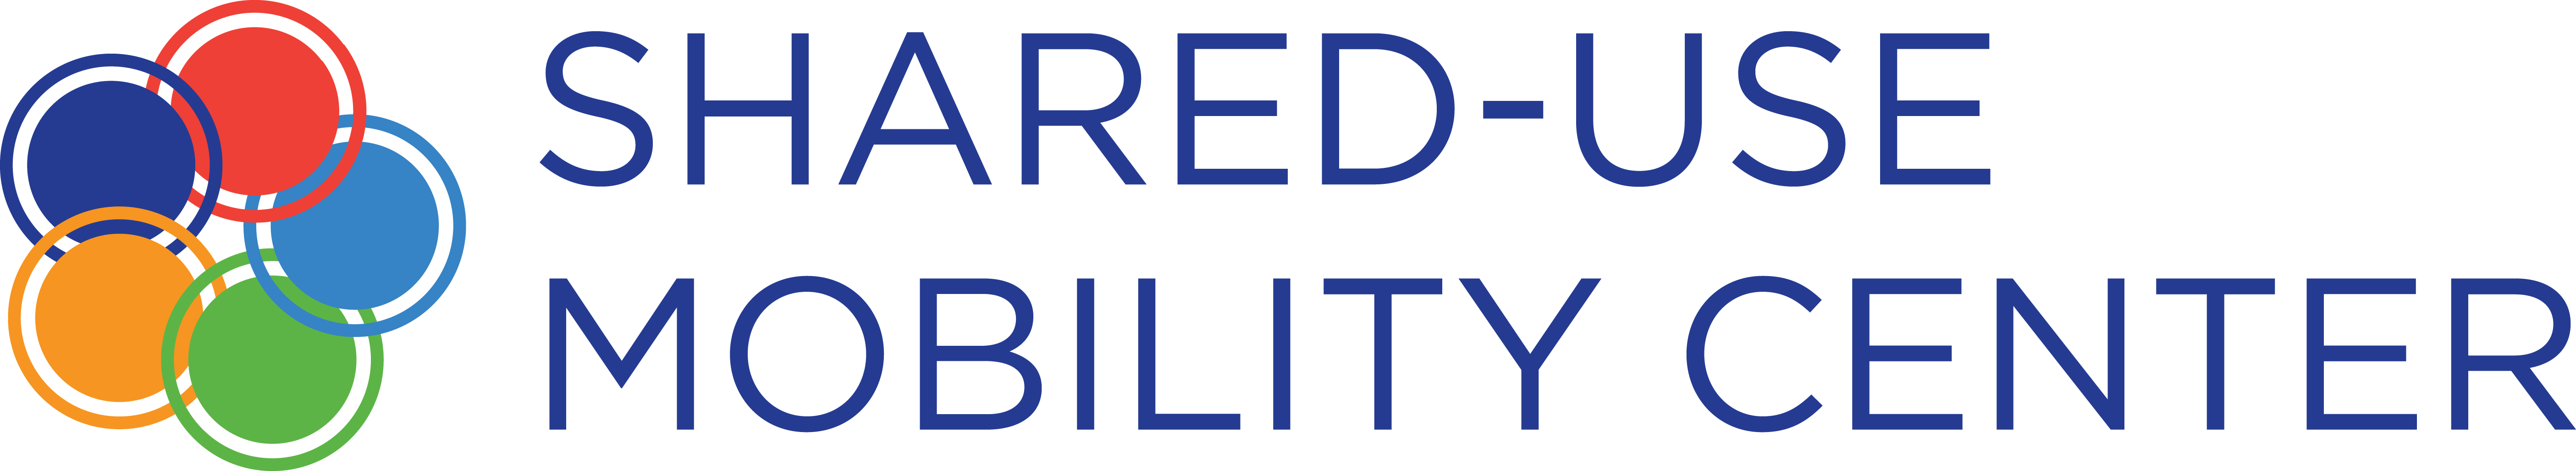 Shared-Use Mobility Center logo